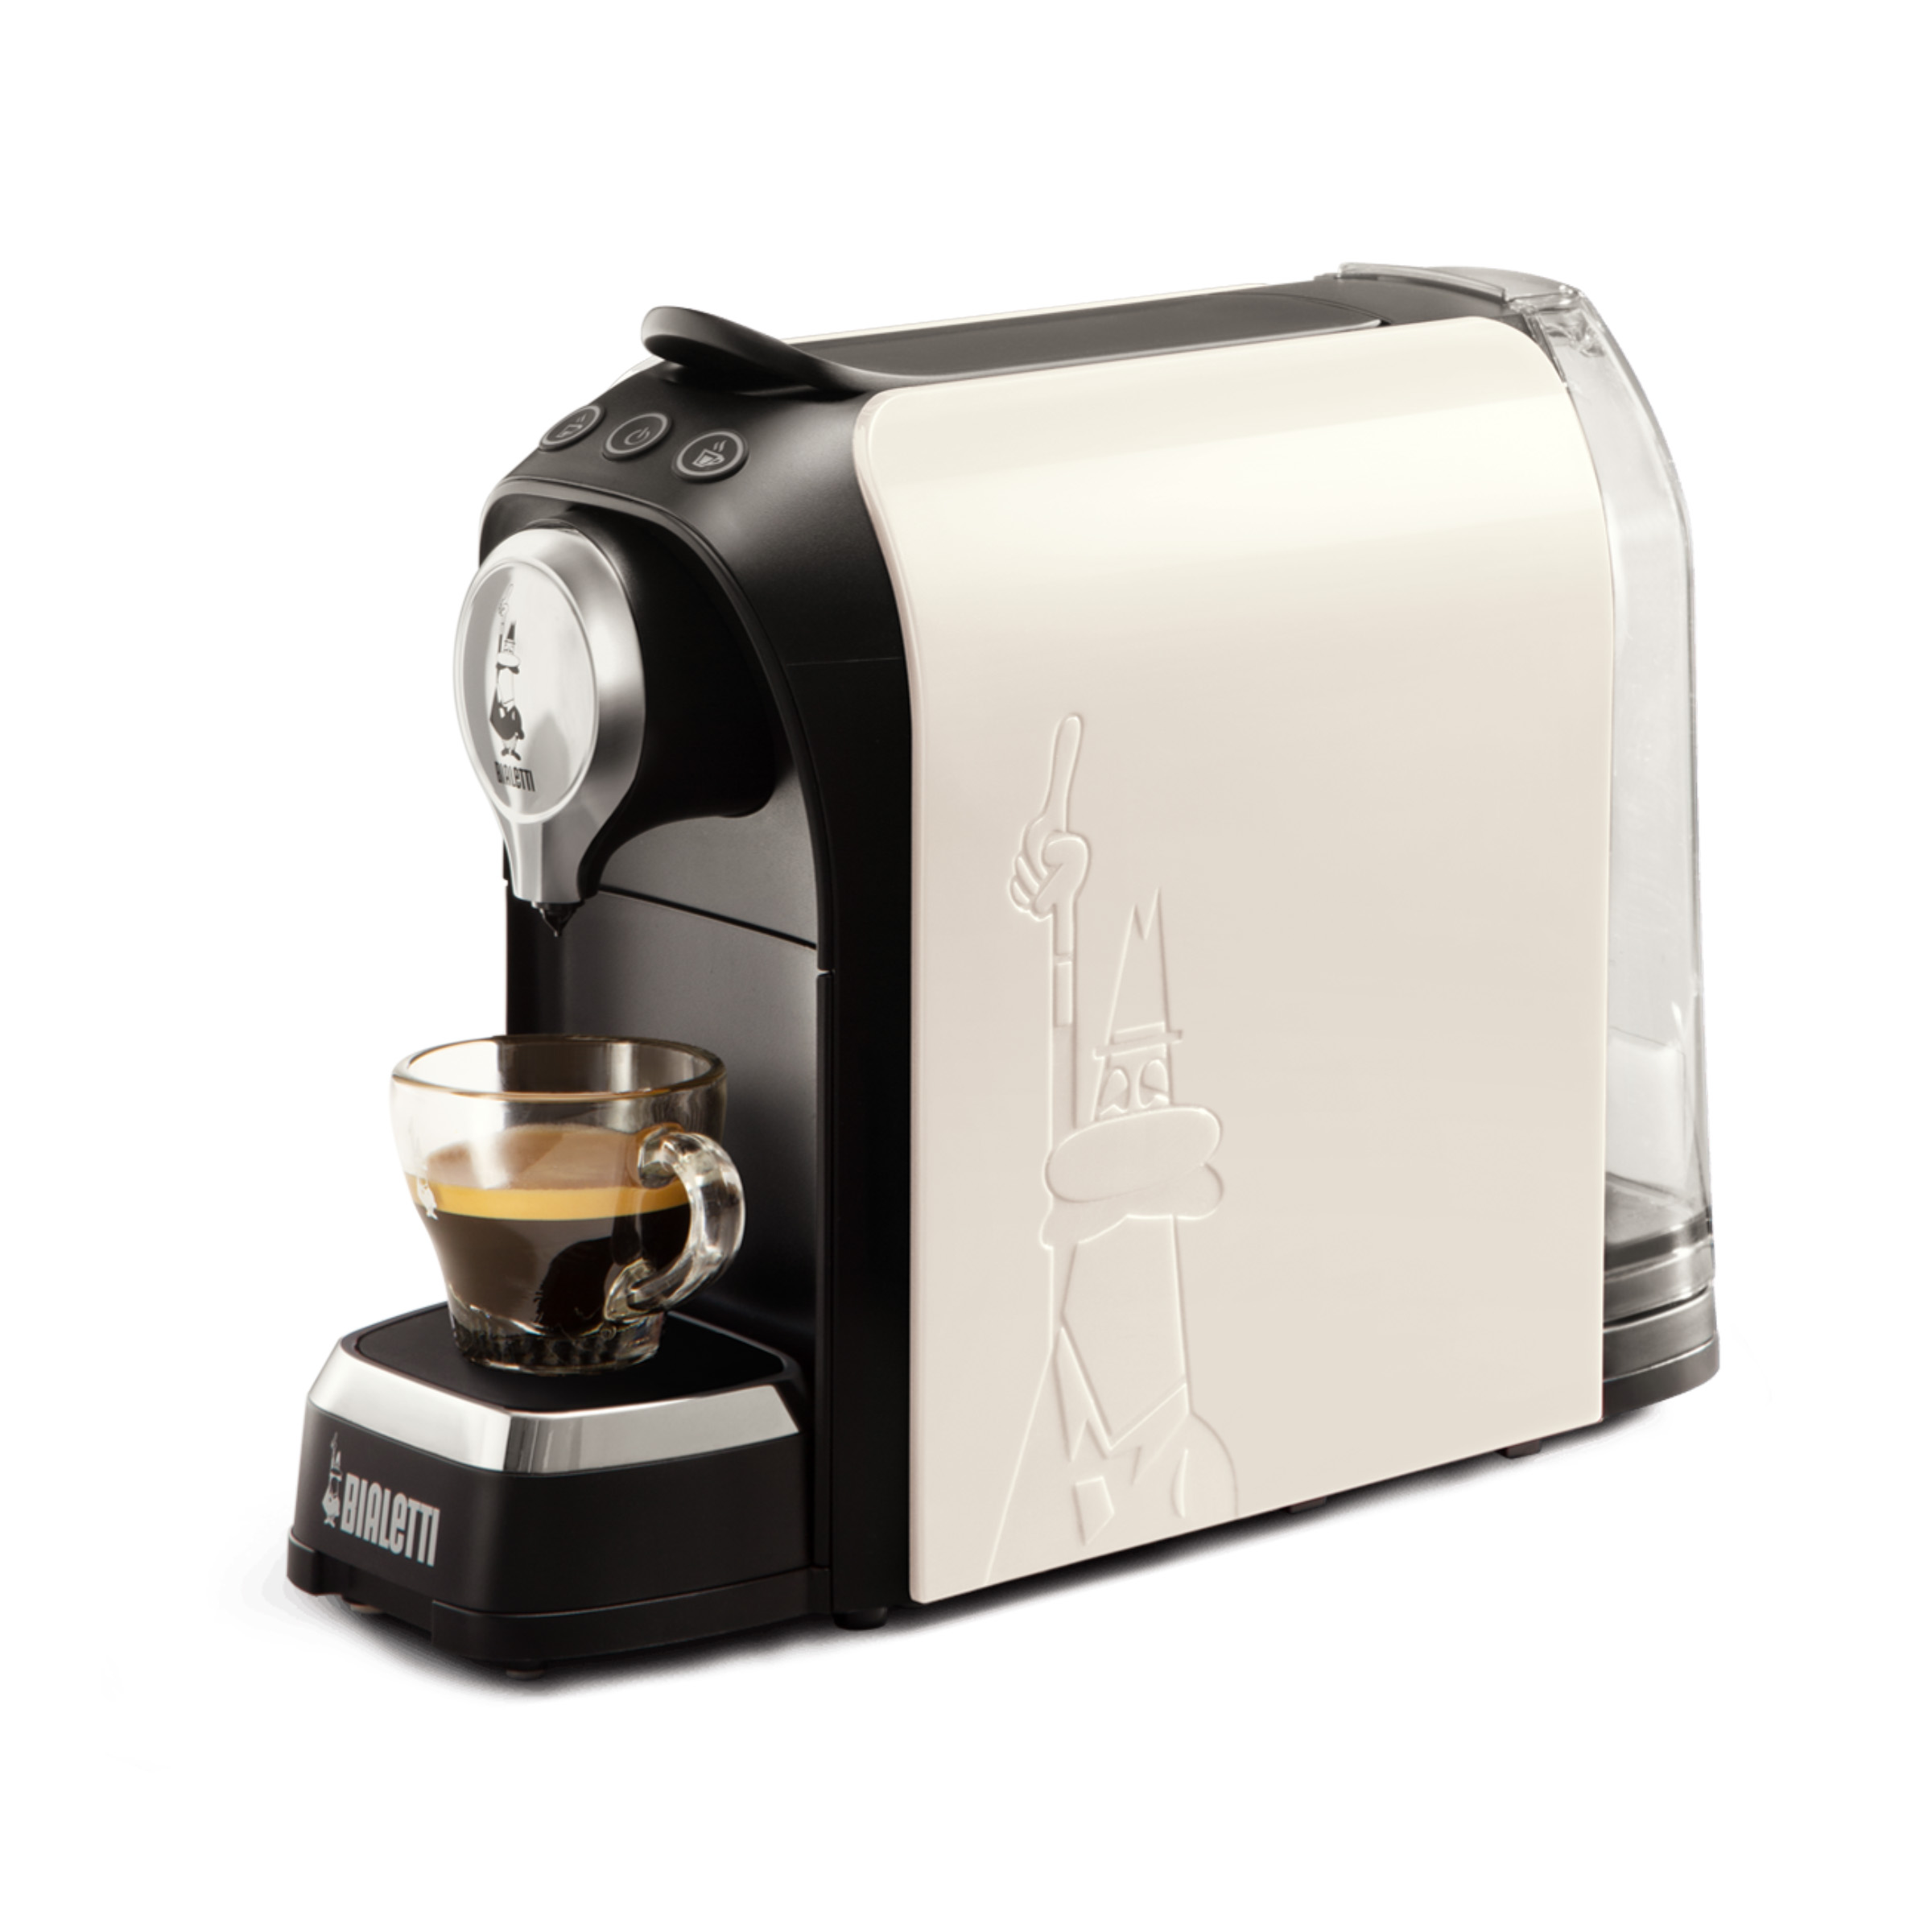 Bialetti Gioia - Capsule Coffee Machine with 4 box of capsules